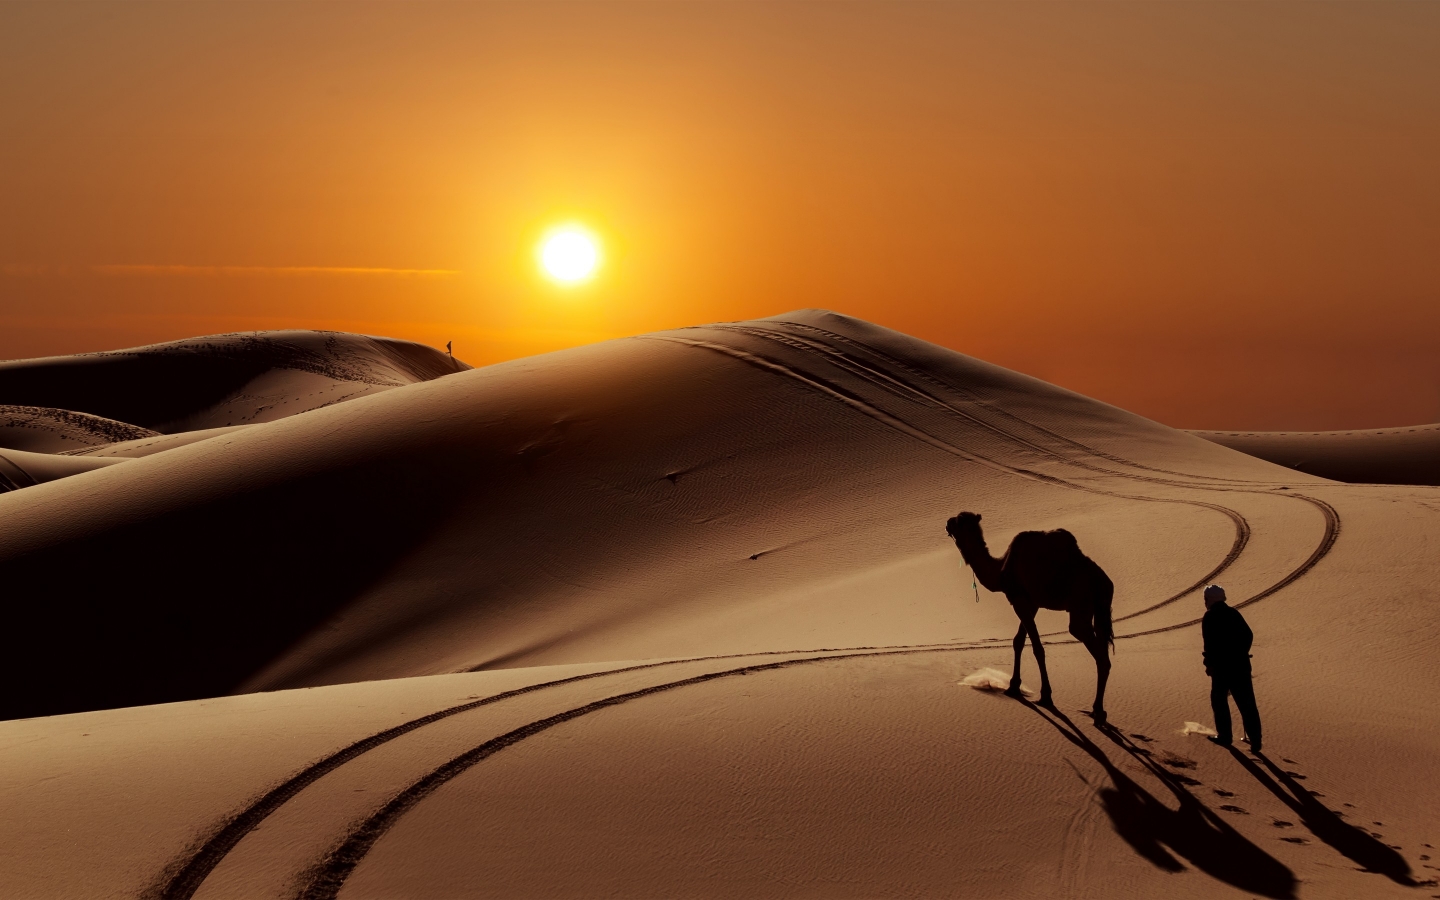 Sunset in Desert for 1440 x 900 widescreen resolution